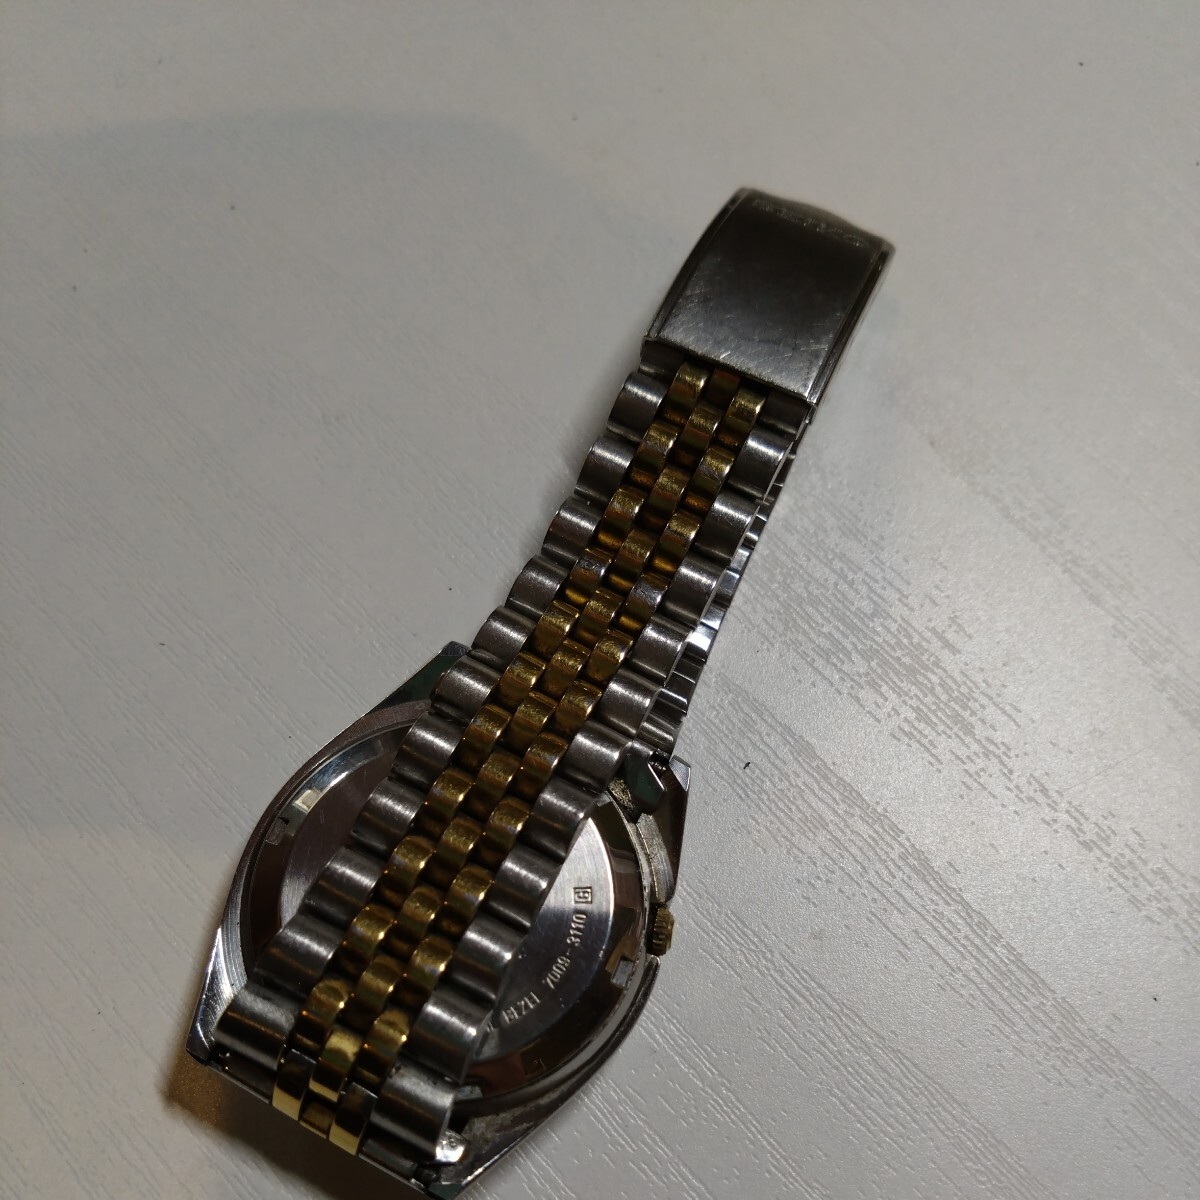 SEIKO セイコー セイコーファイブ 7009-3110 デイデイト 自動巻き 腕時計 シルバー/ゴールド メンズ_画像6